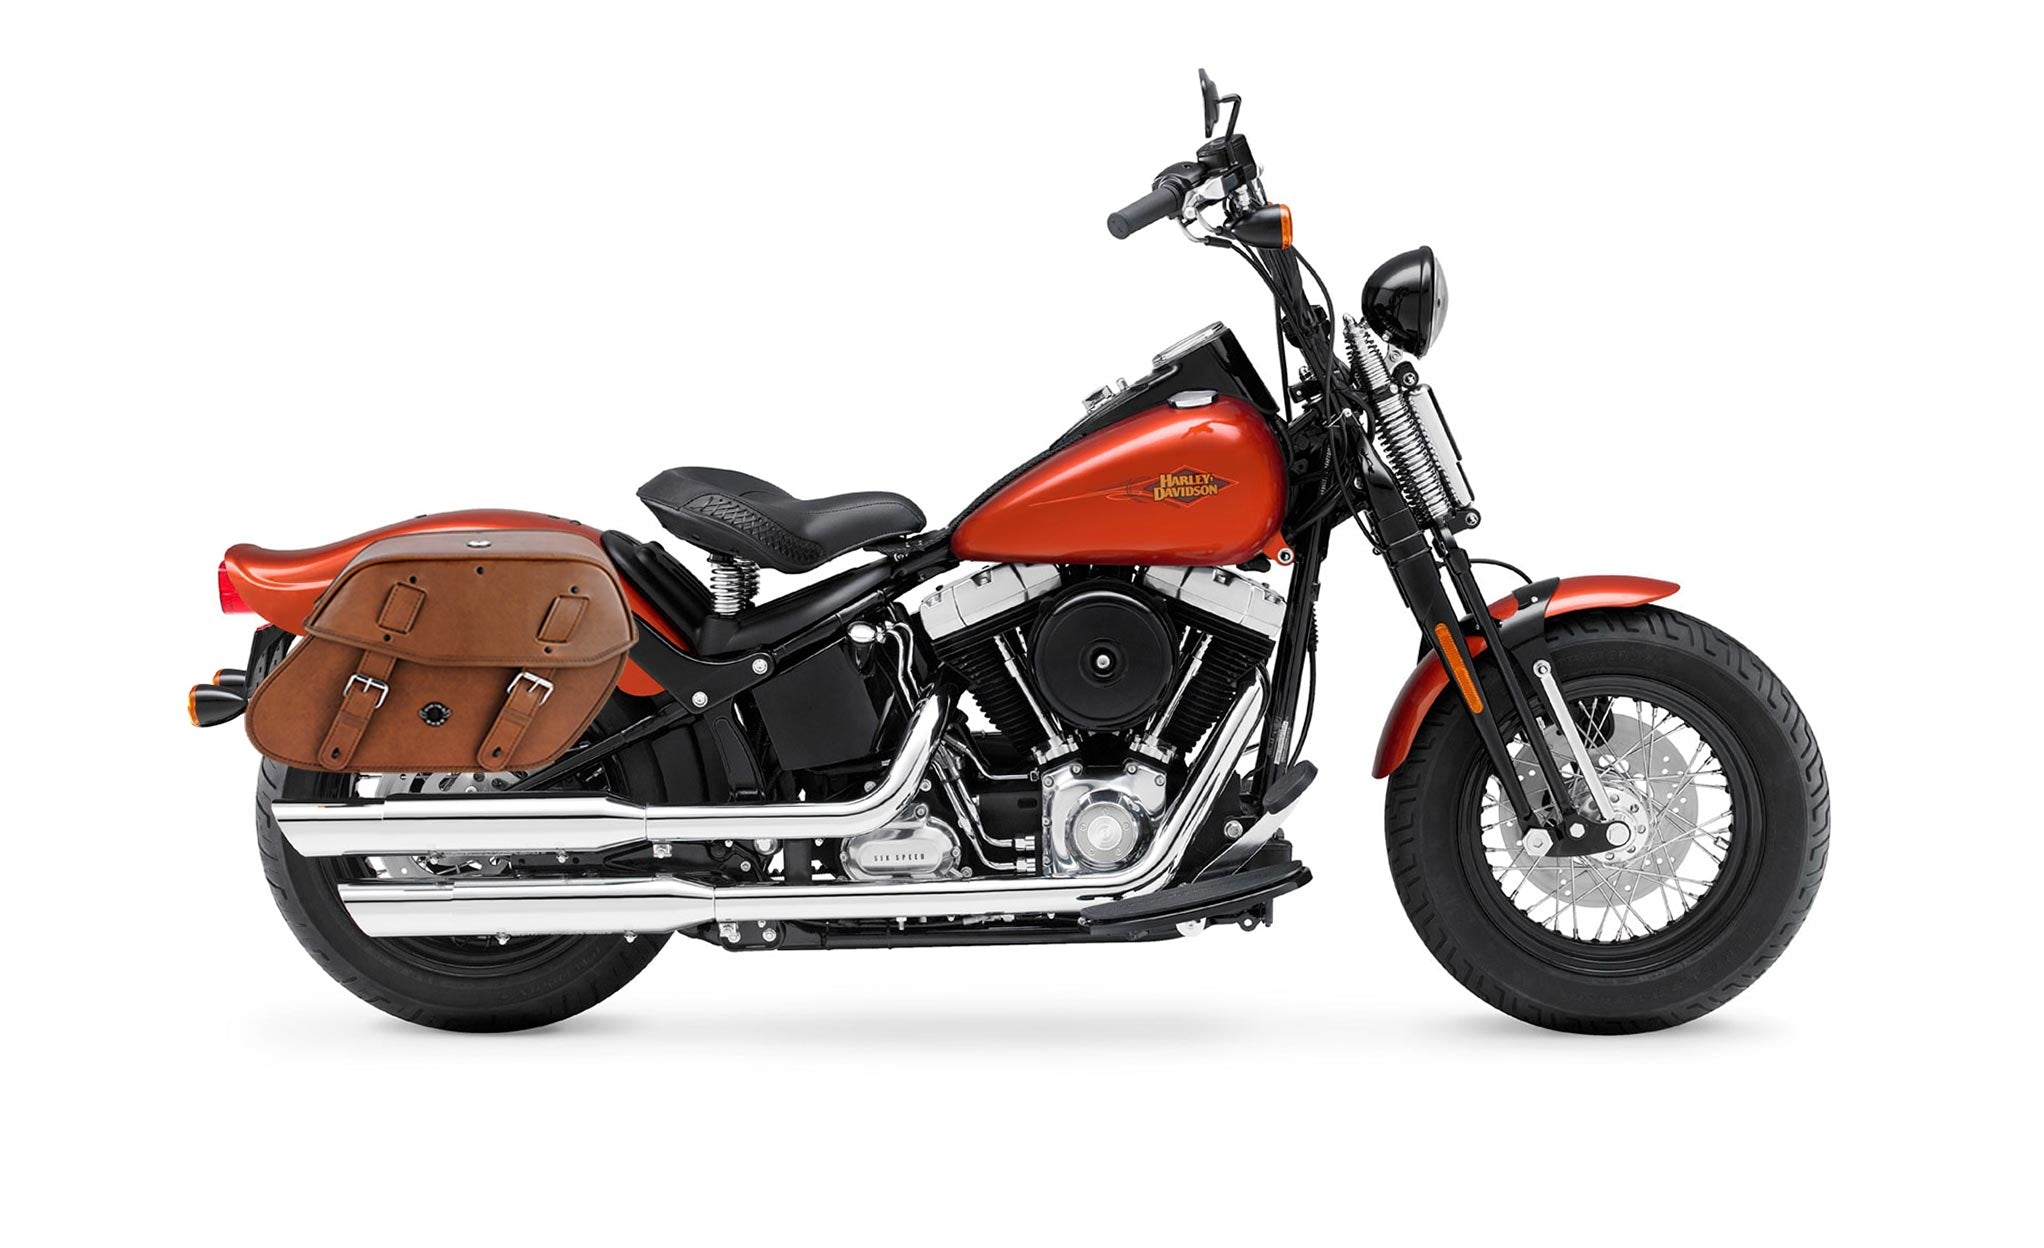 Viking Odin Brown Large Leather Motorcycle Saddlebags For Harley Softail Cross Bones Flstsb on Bike Photo @expand